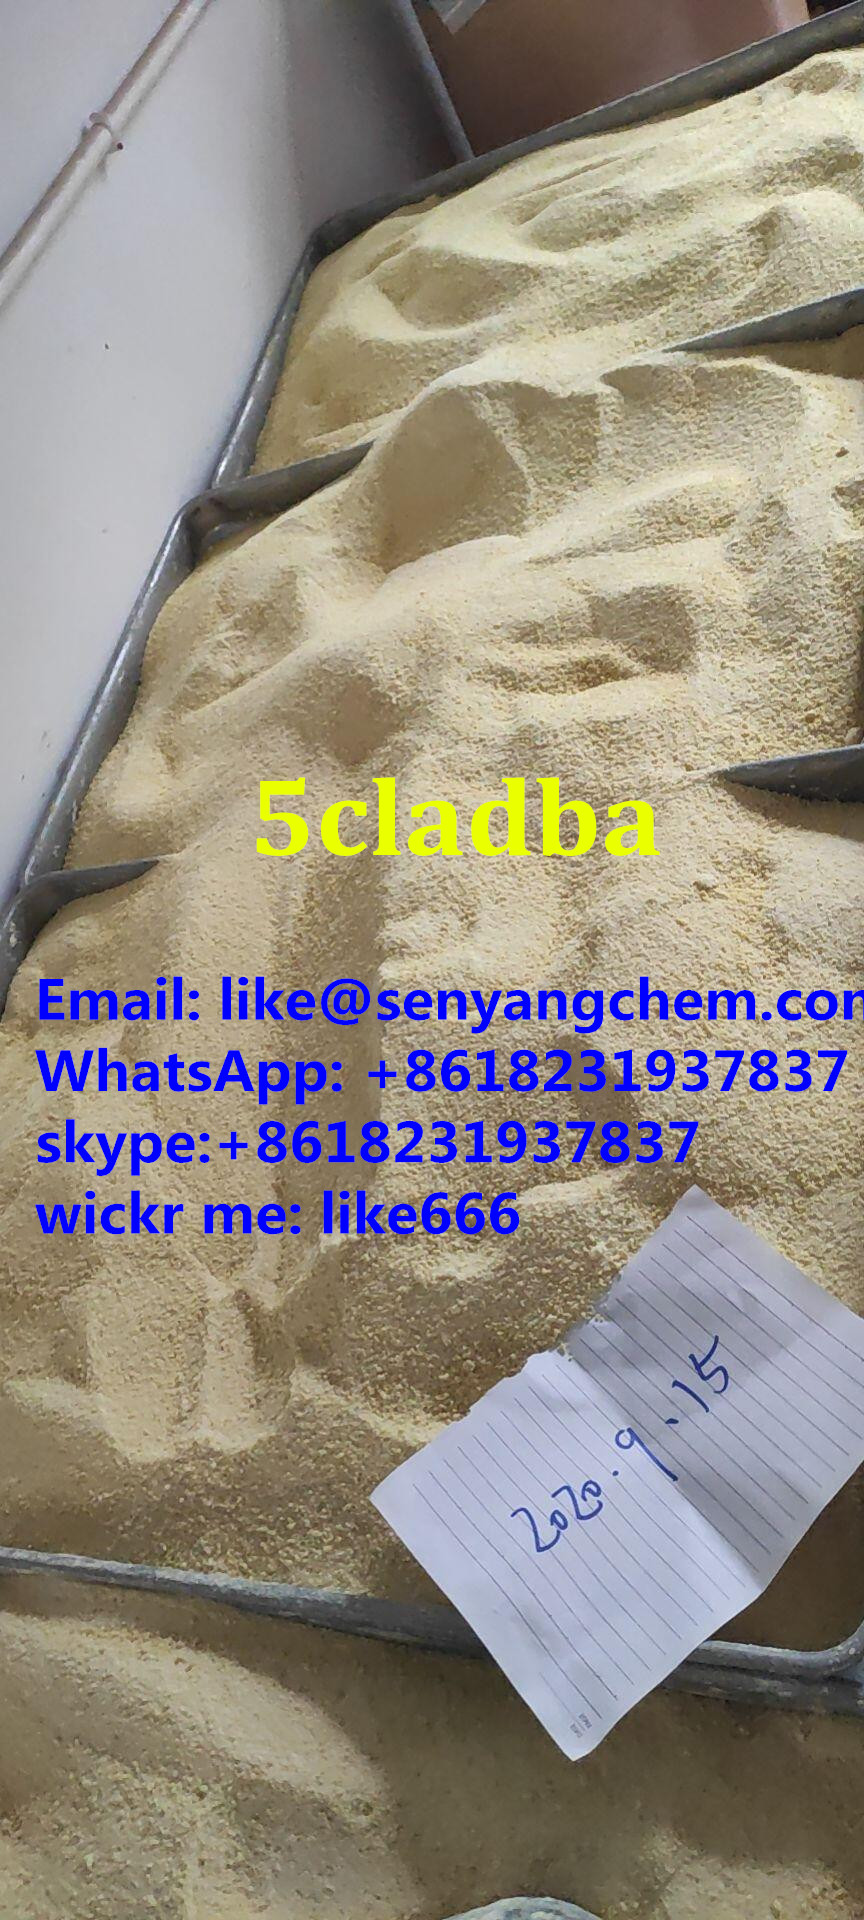 5cladba 5cl-adba yellow powder Email: like@senyangchem.com WhatsApp: +8618231937837